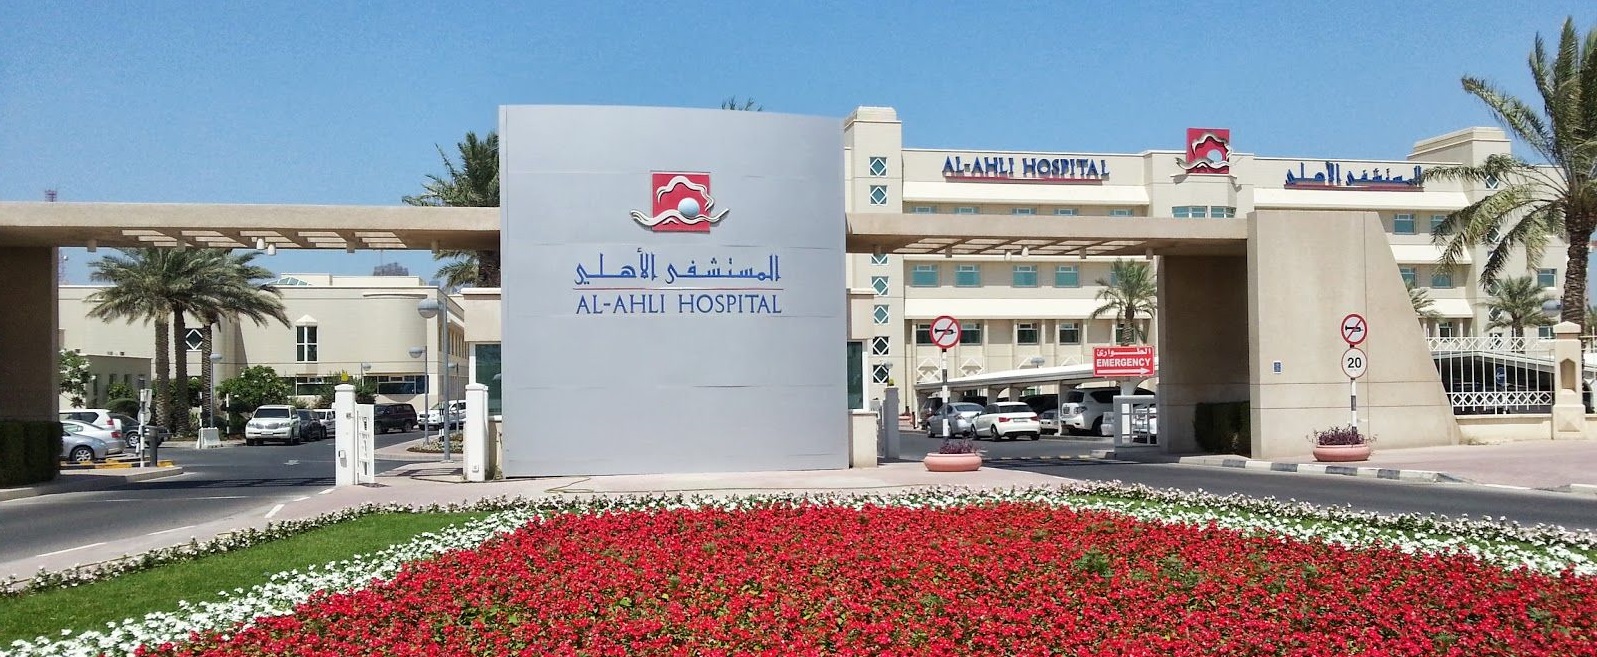 Al Ahli Hospital - Top 10 Hospitals in Qatar